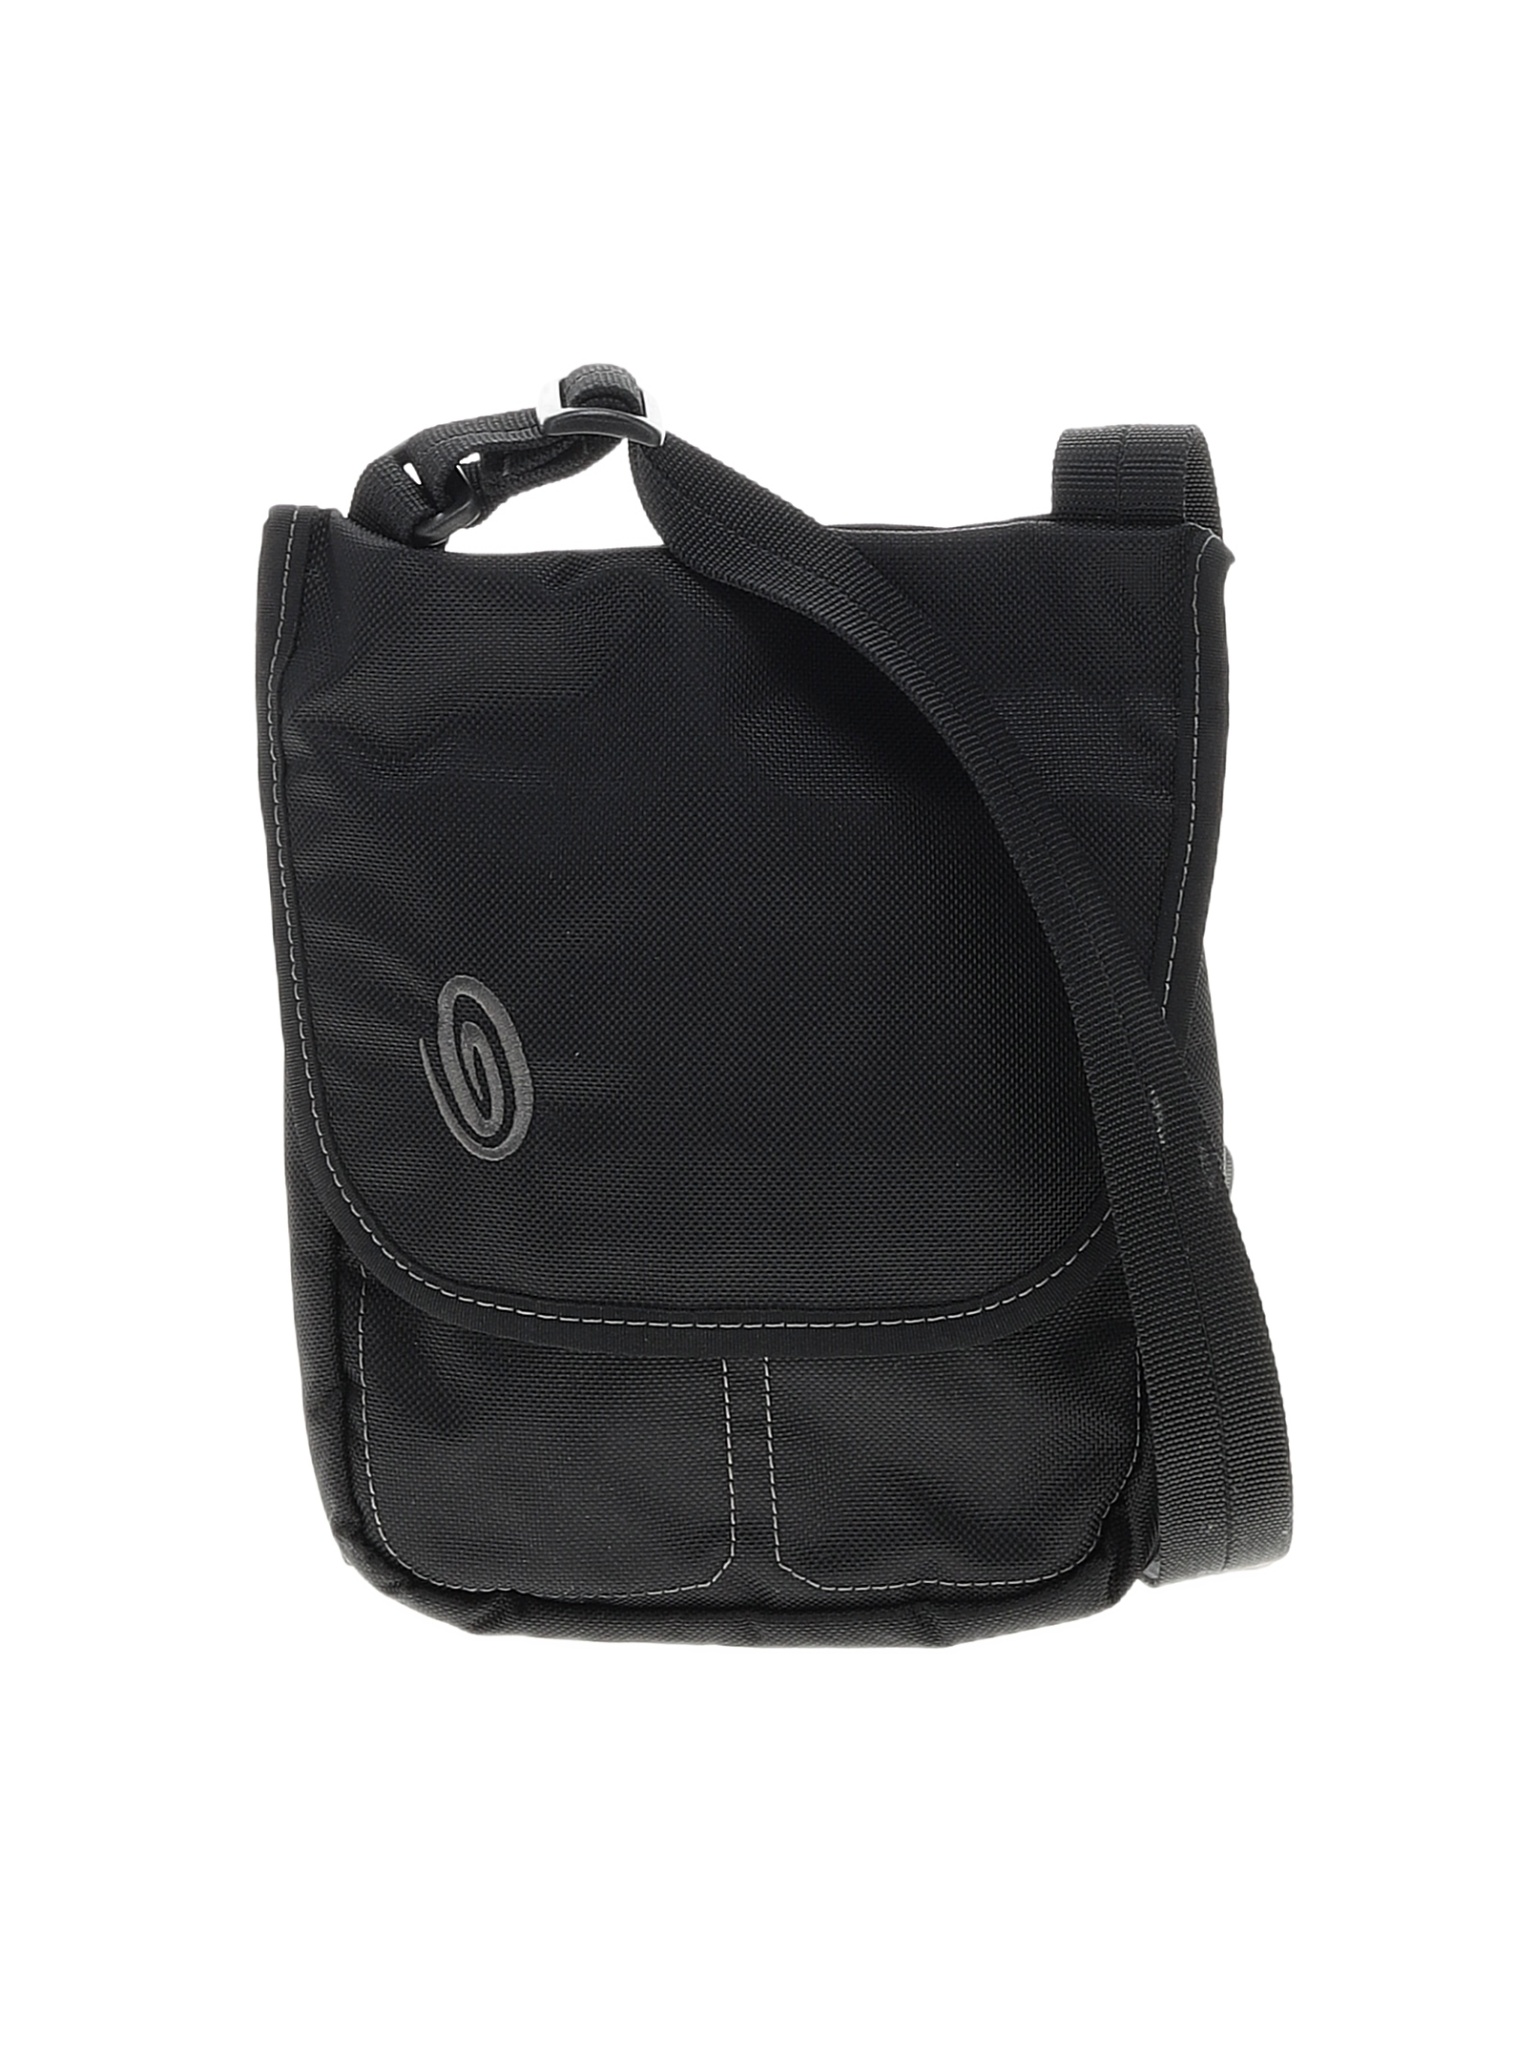 Timbuk2 Solid Black Crossbody Bag One Size - 57% off | thredUP